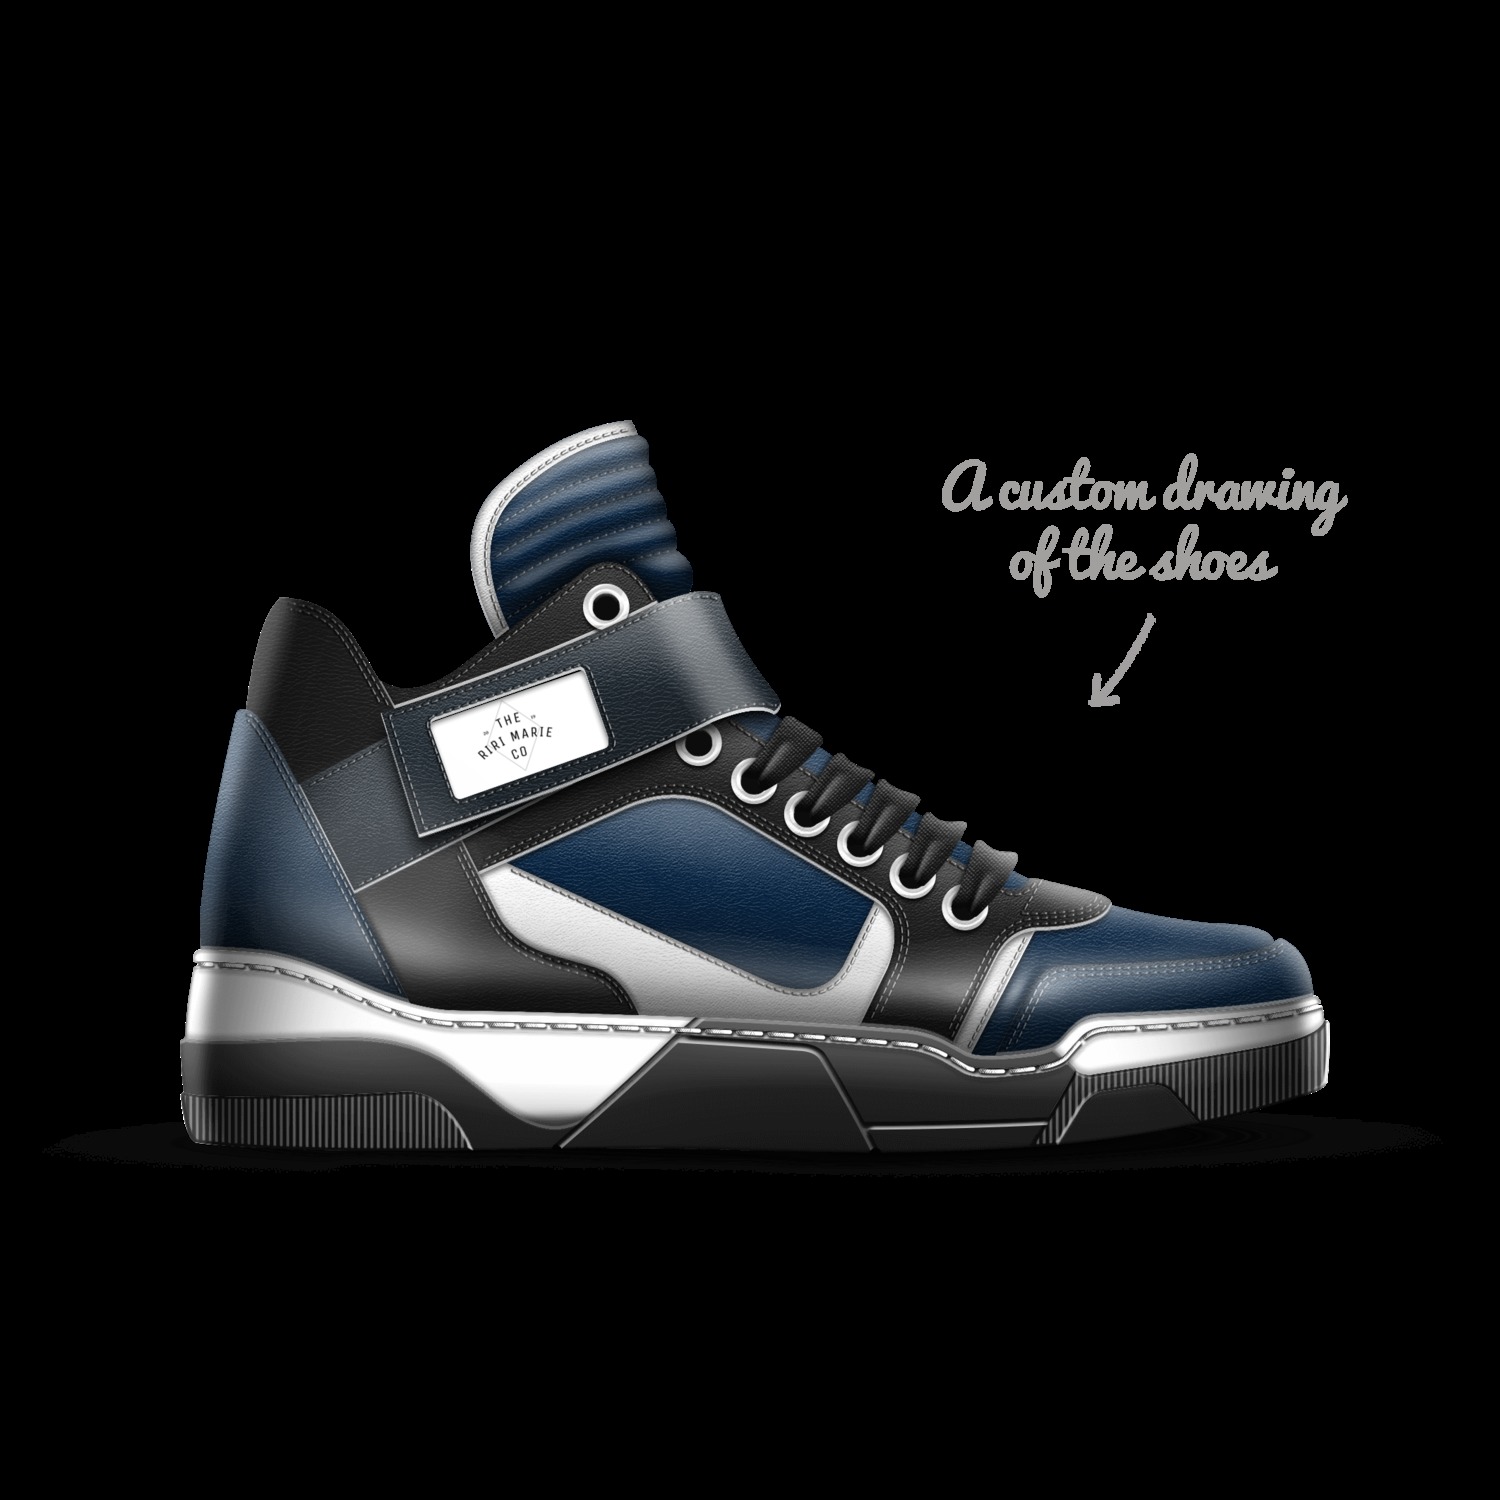 Riri Marie | A Custom Shoe concept by 